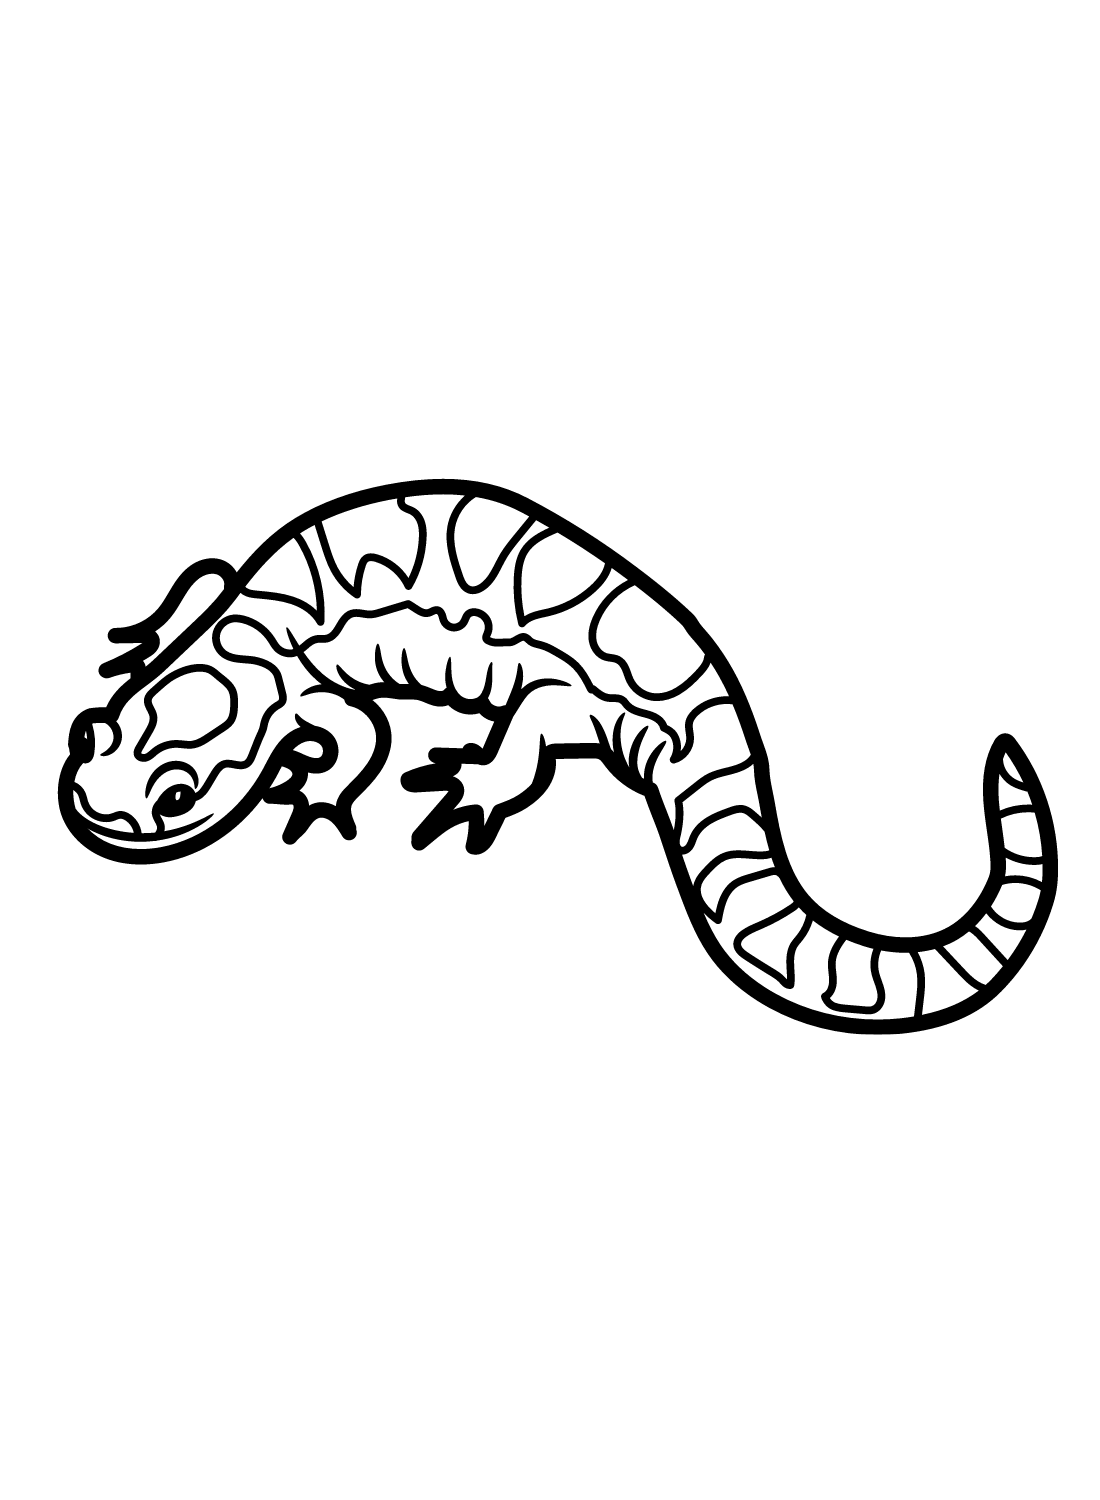 Salamander coloring pages printable for free download